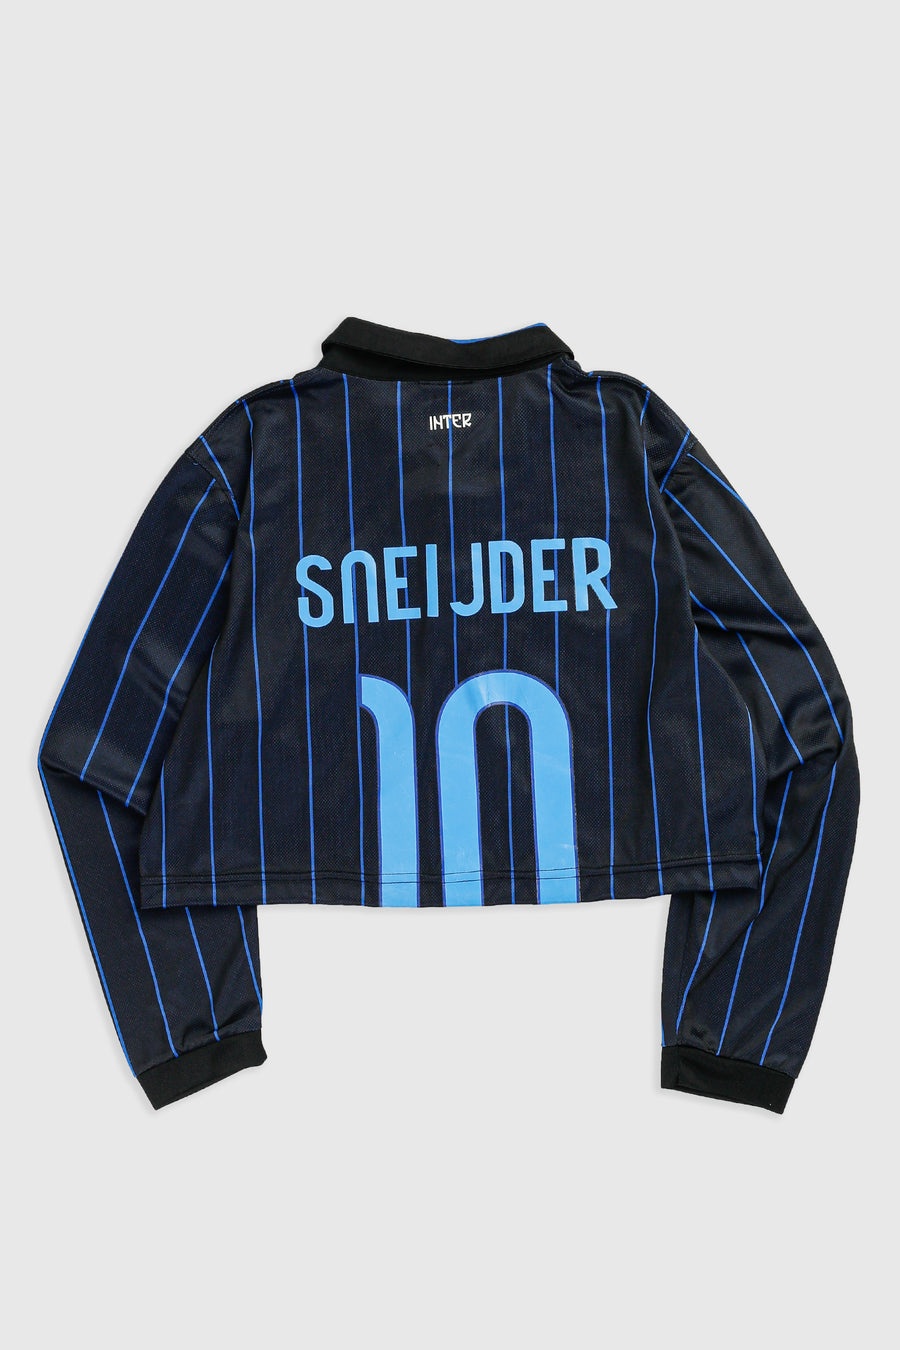 Rework Crop Inter Milan Soccer Long Sleeve Jersey - M